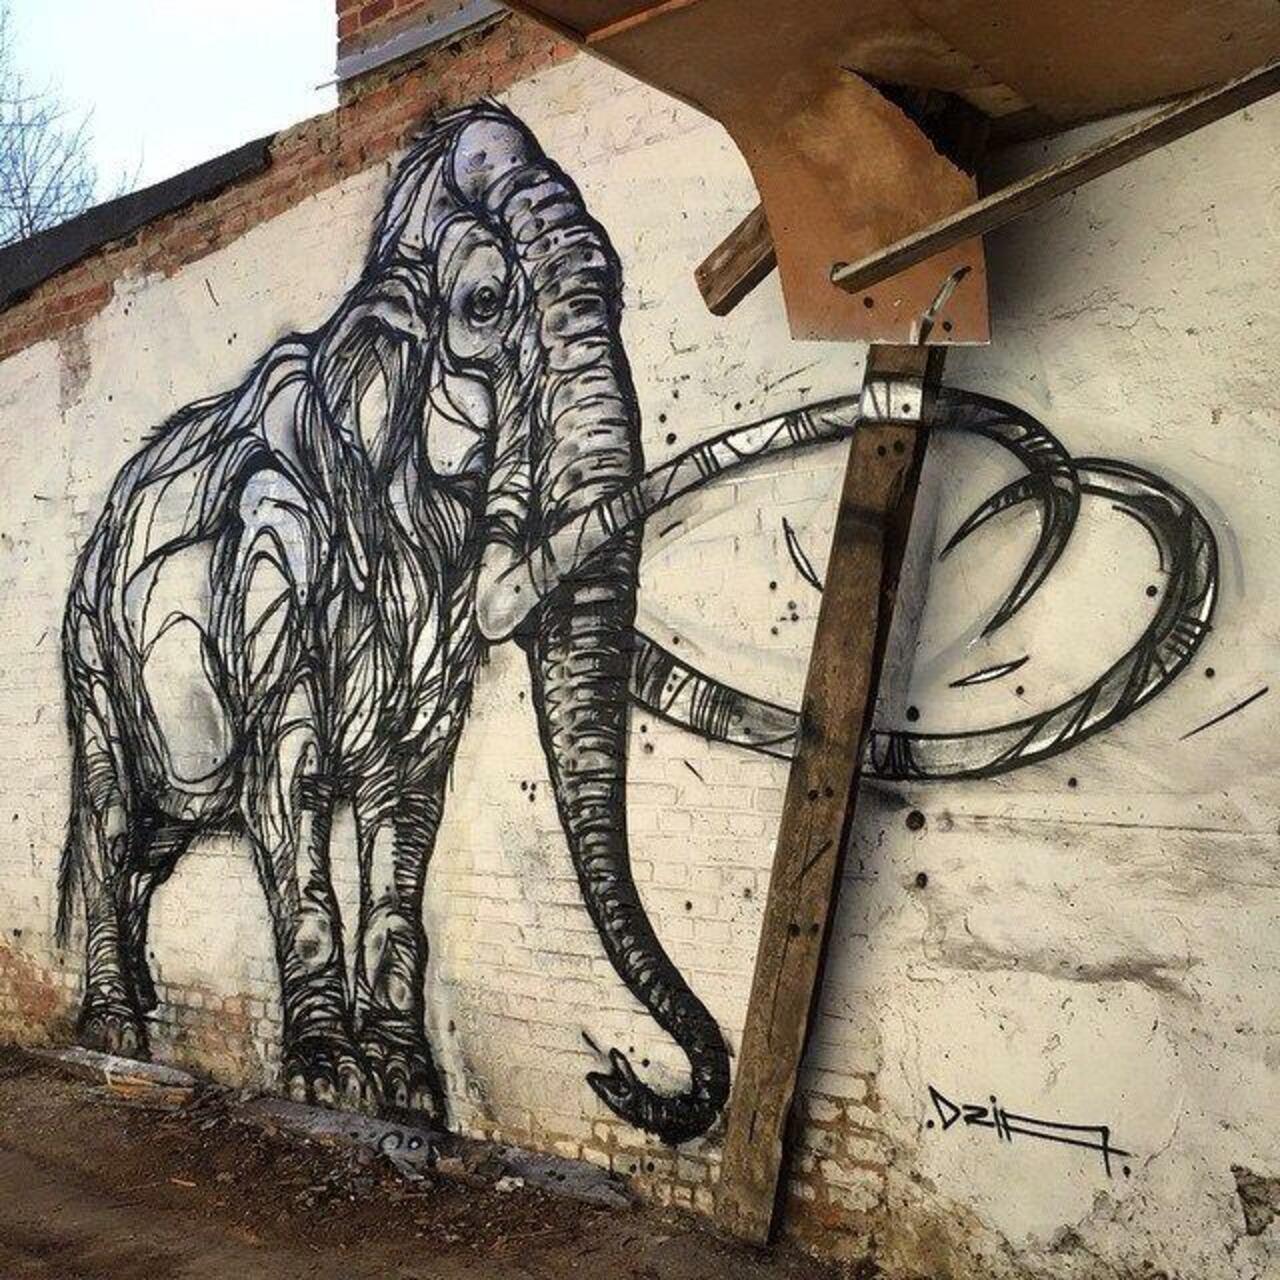 Sistemas4S: Mammoth. New nature in Street Art wall by DZIA 

#art #graffiti #mural #streetart http://t.co/il19aaOueO